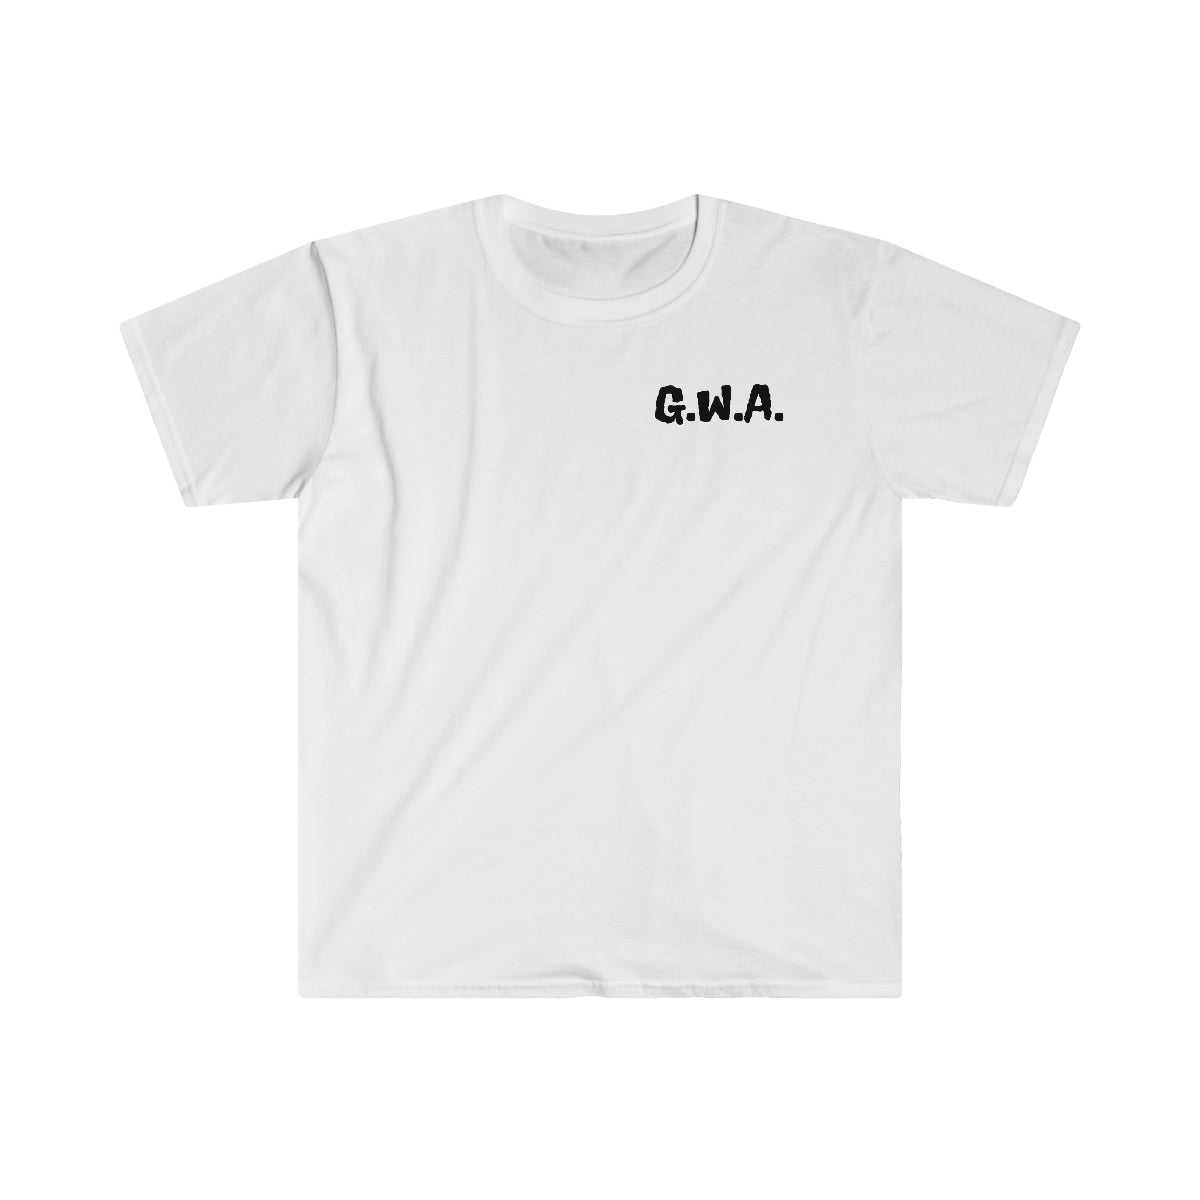 GUERRILLA WARFARE Unisex Softstyle T-Shirt WAR COLLECTION